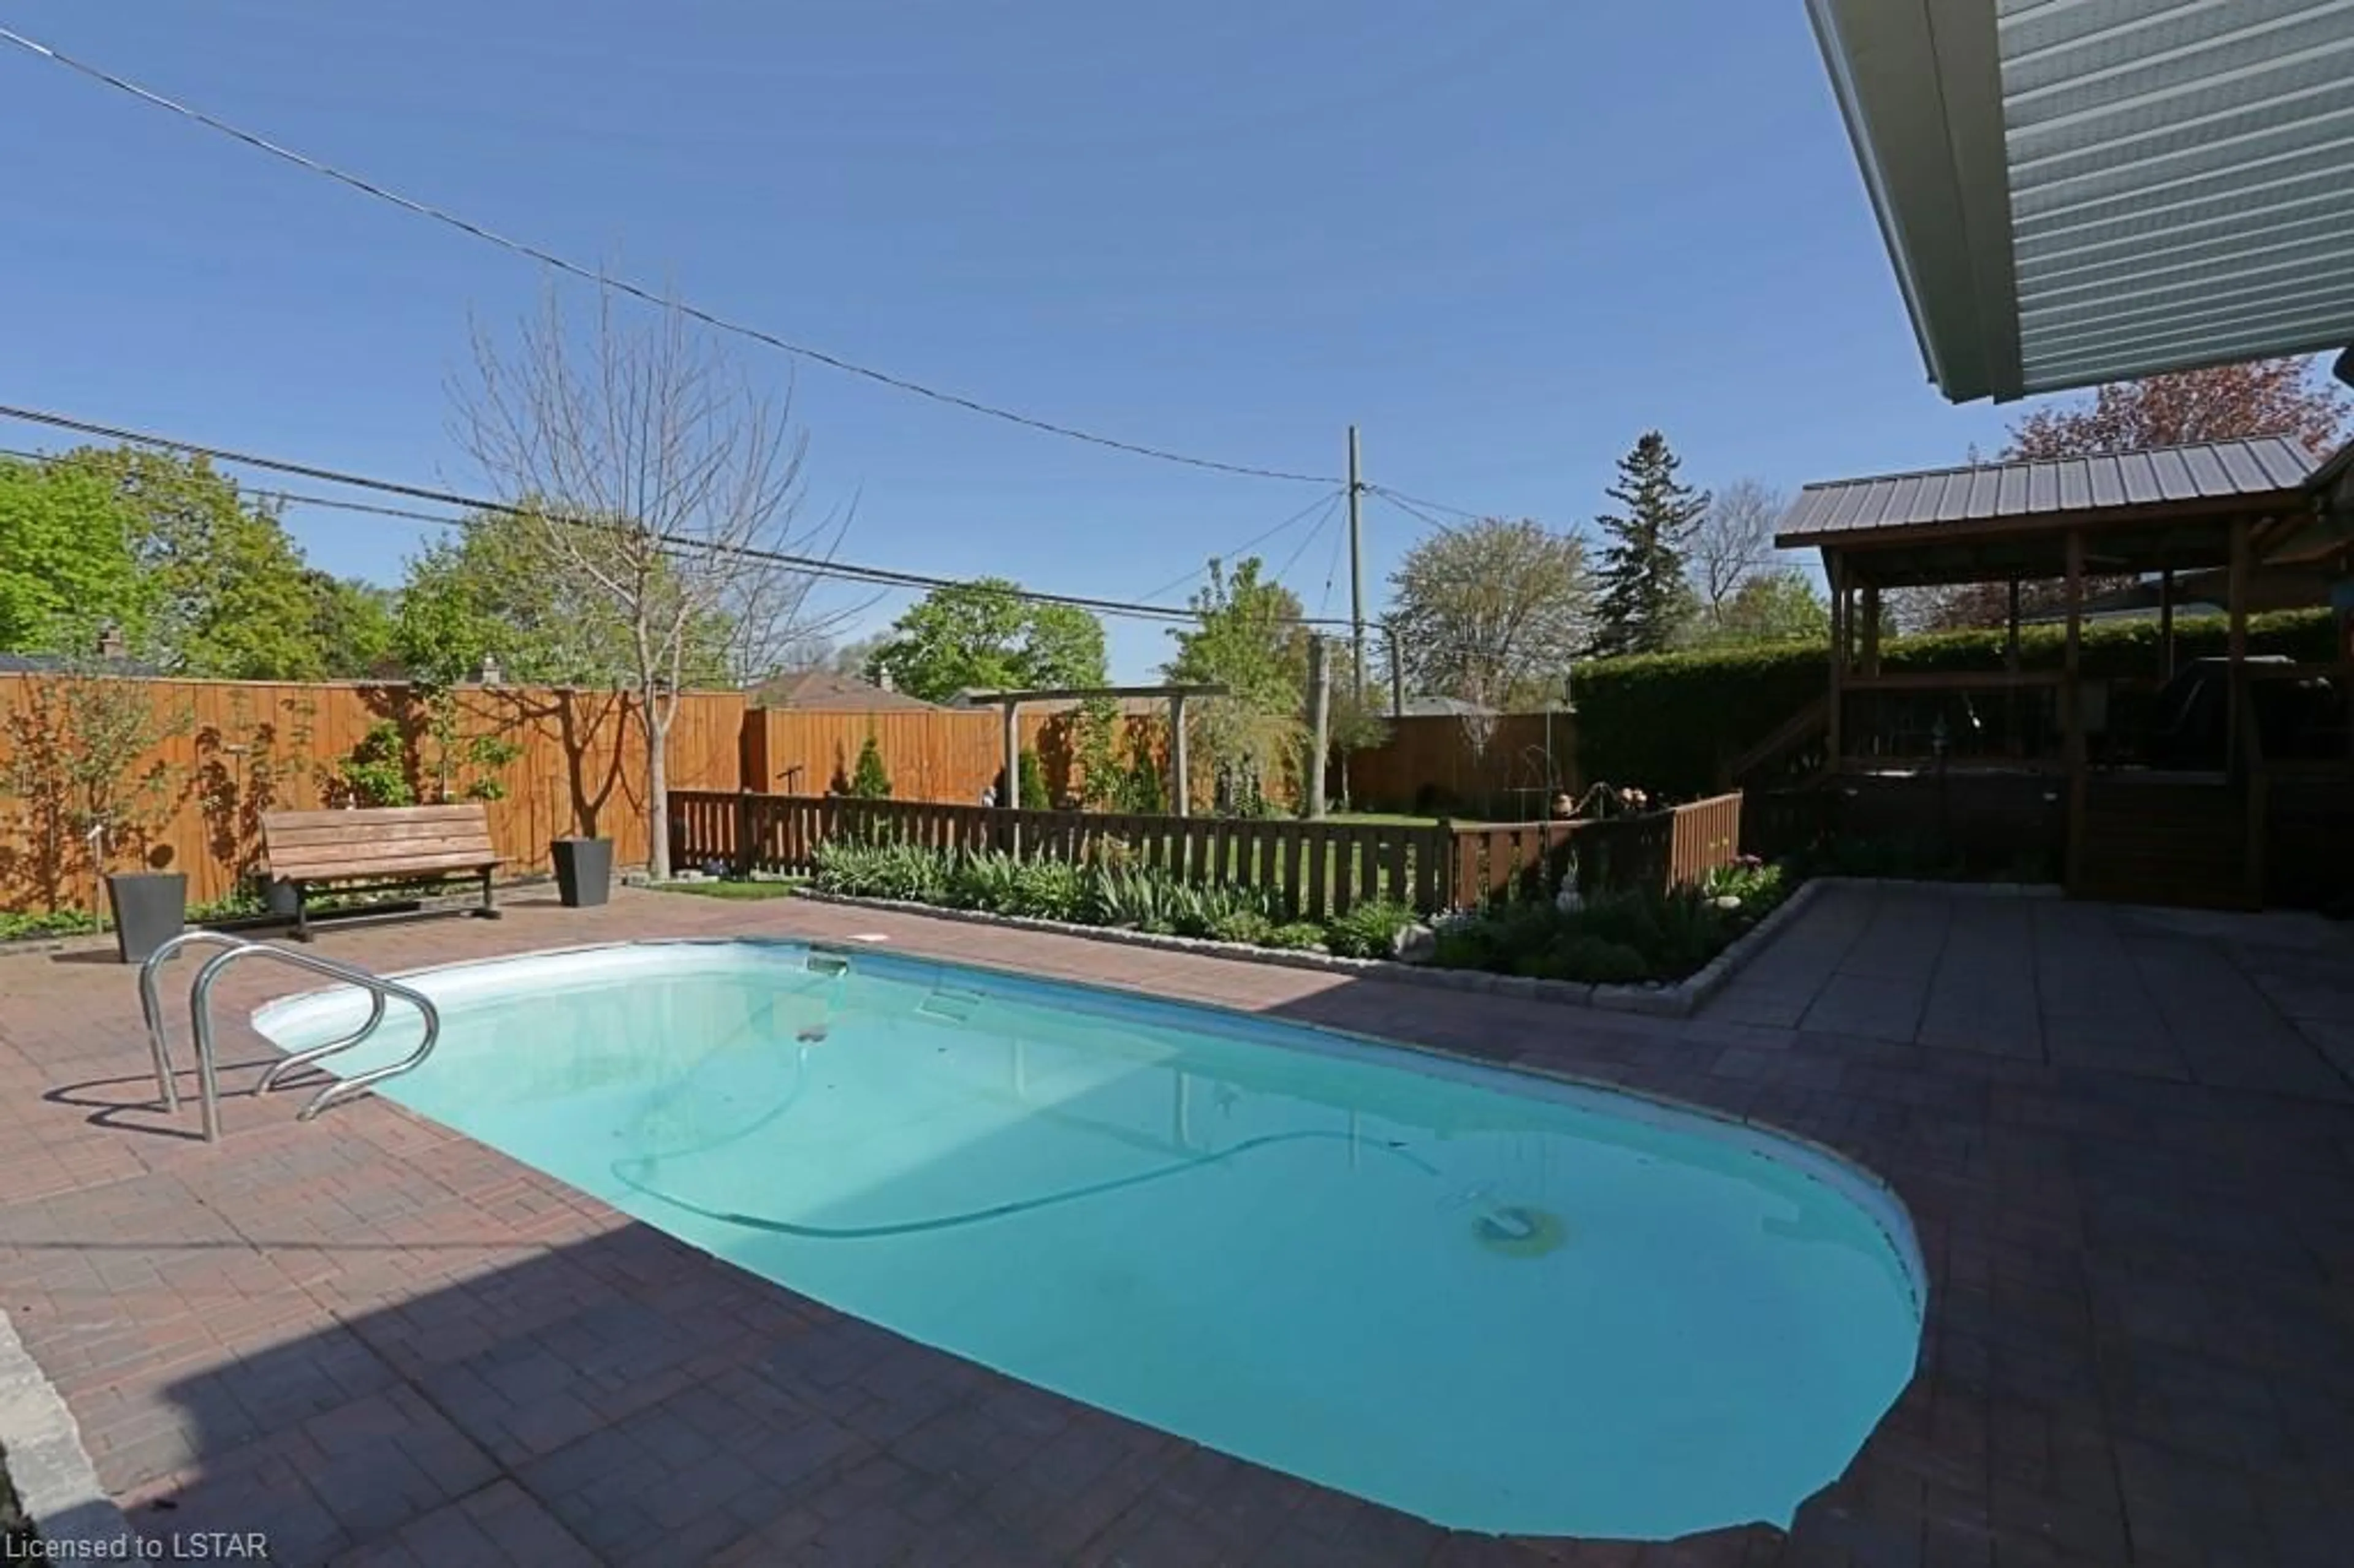 Indoor or outdoor pool for 10 Oregon Rd, London Ontario N5Z 4B9